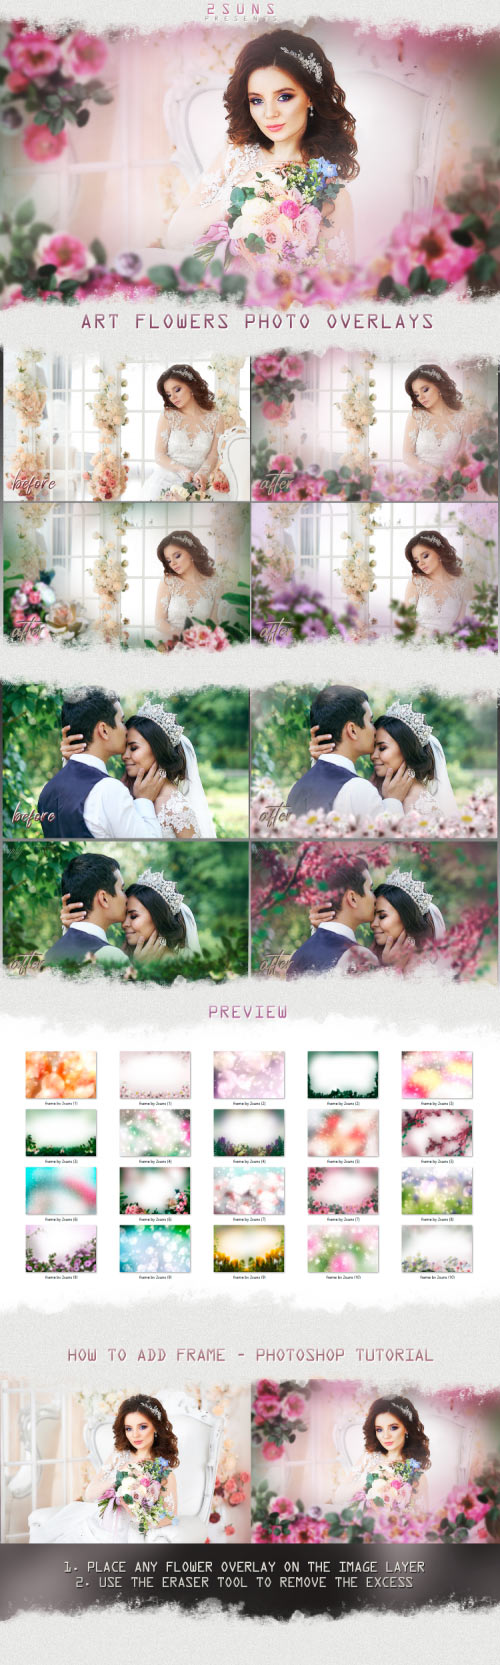 Art flowers overlays frame templates wedding